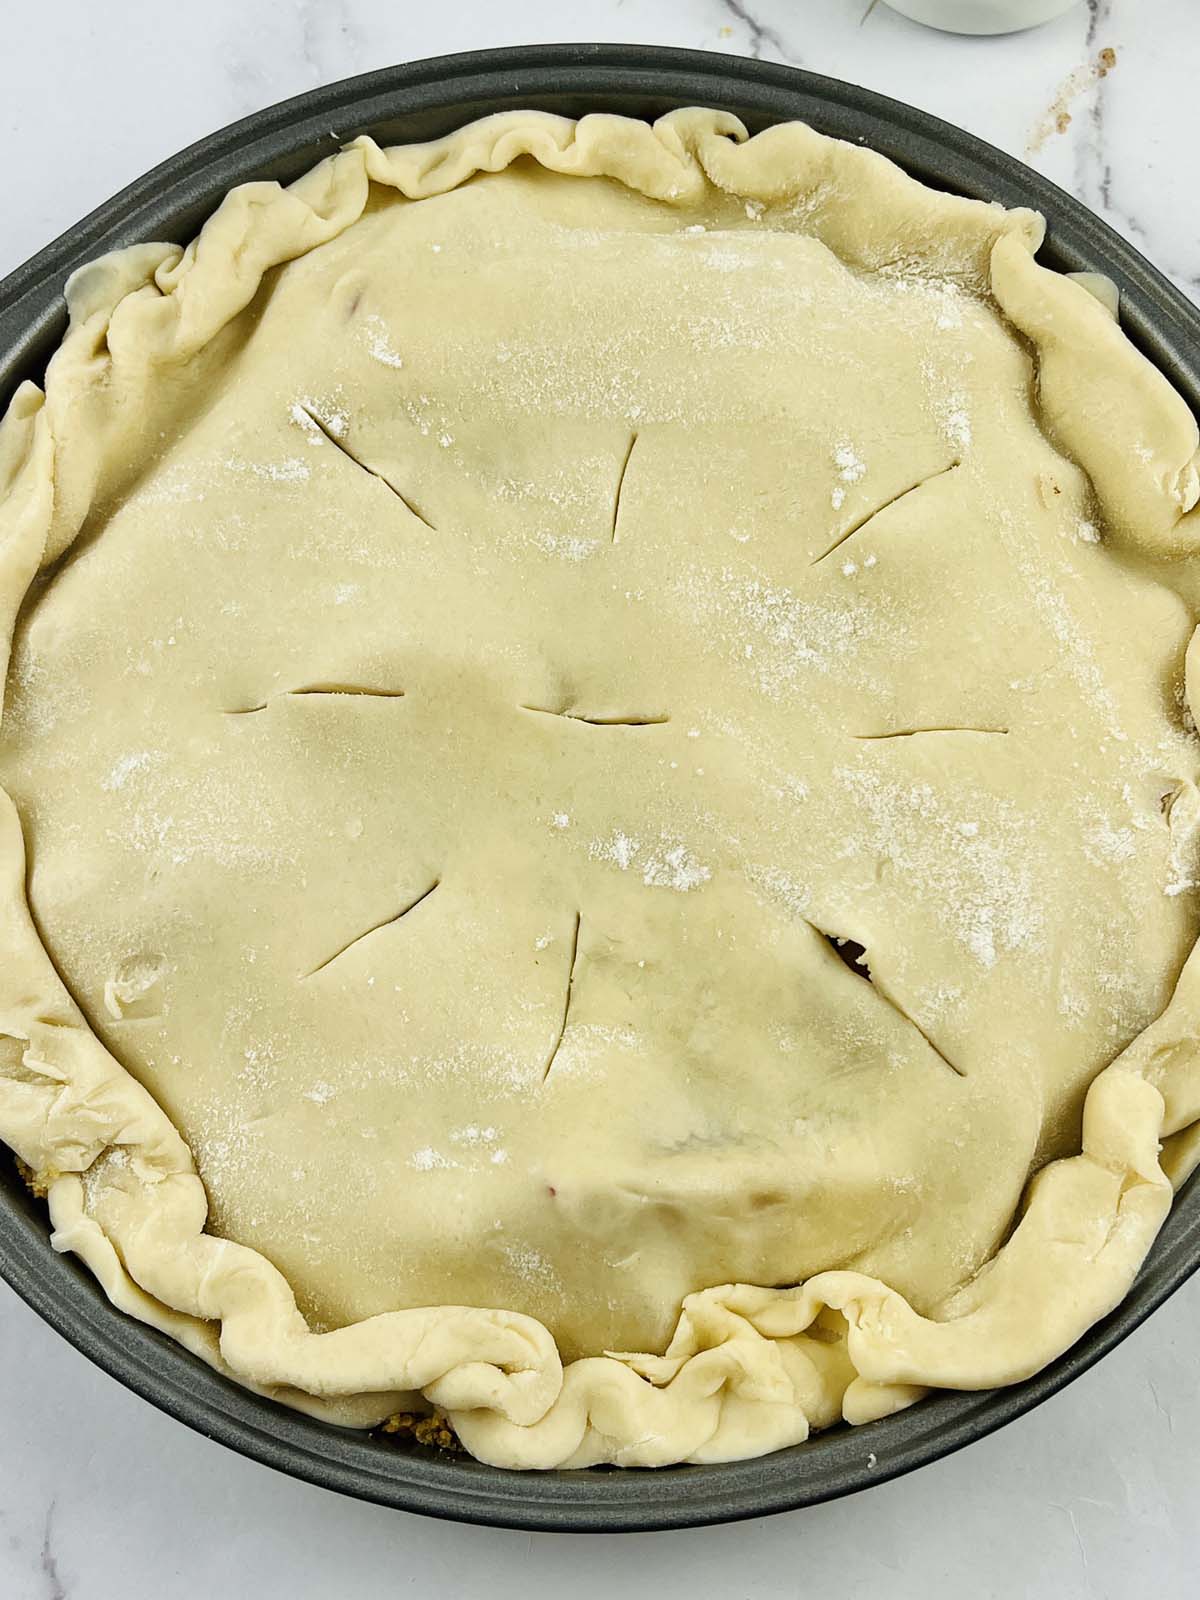 Unbaked apple pie in a pie tin.